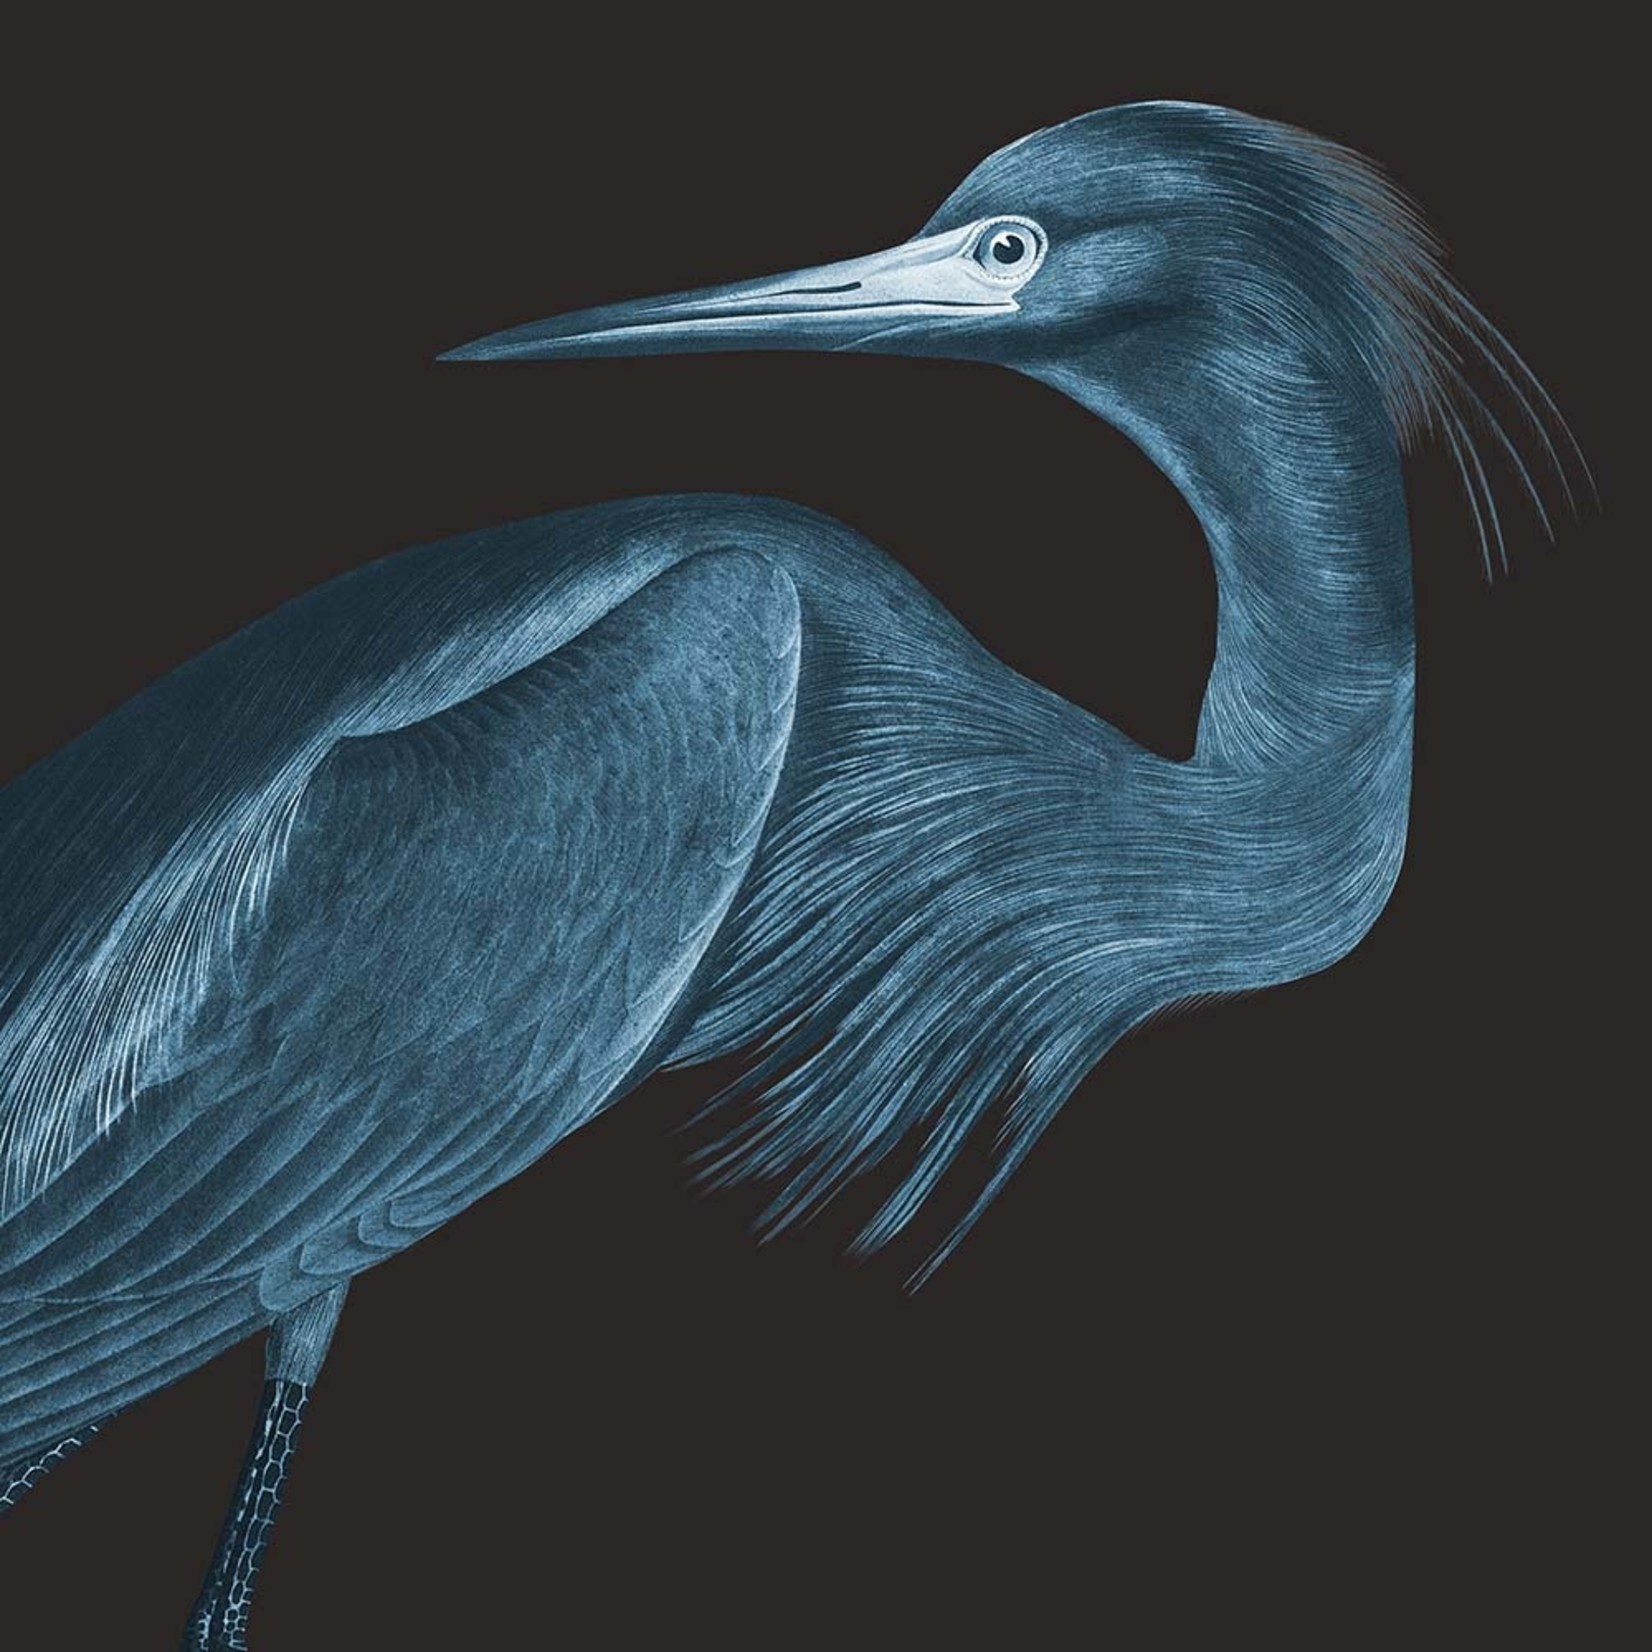 Fine Art Print on Rag Paper Blue Crane (Black Background) by John James Audubon